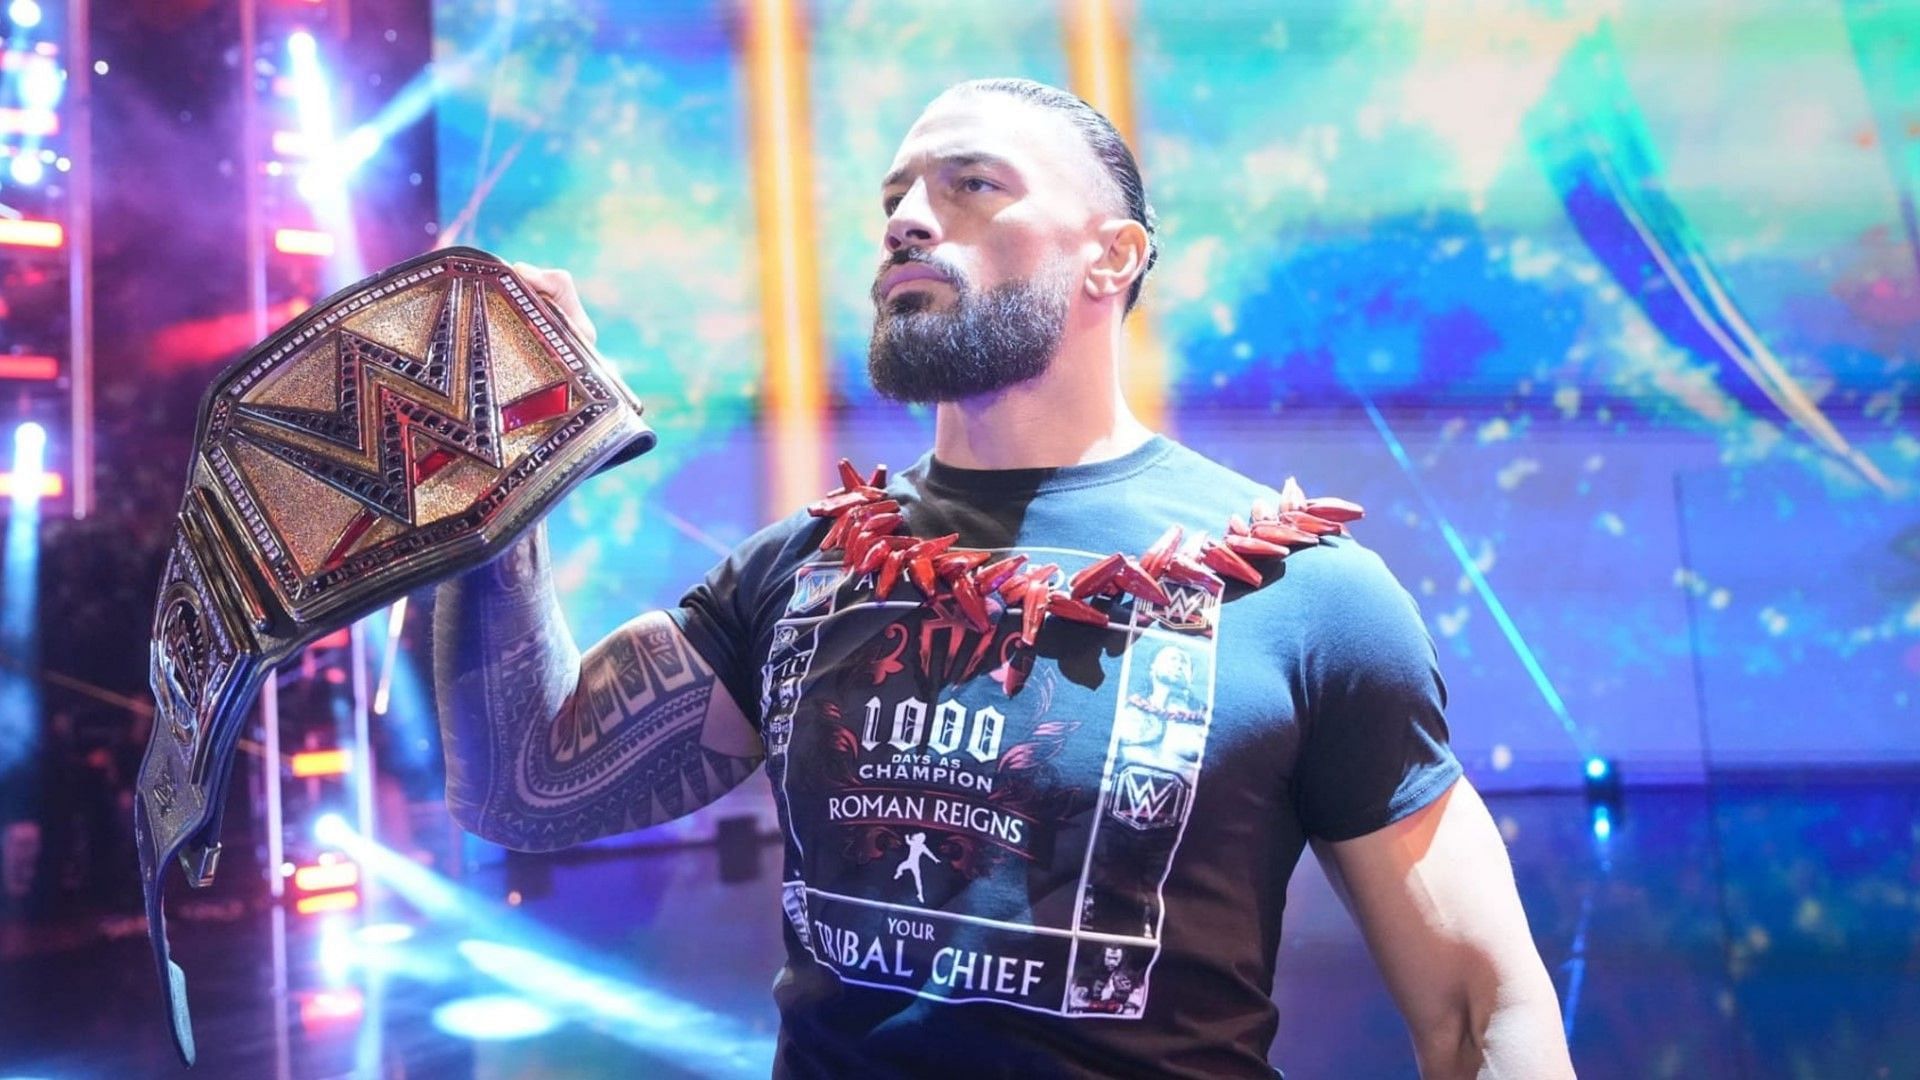 Roman Reigns raises the Undisputed WWE Universal Championship